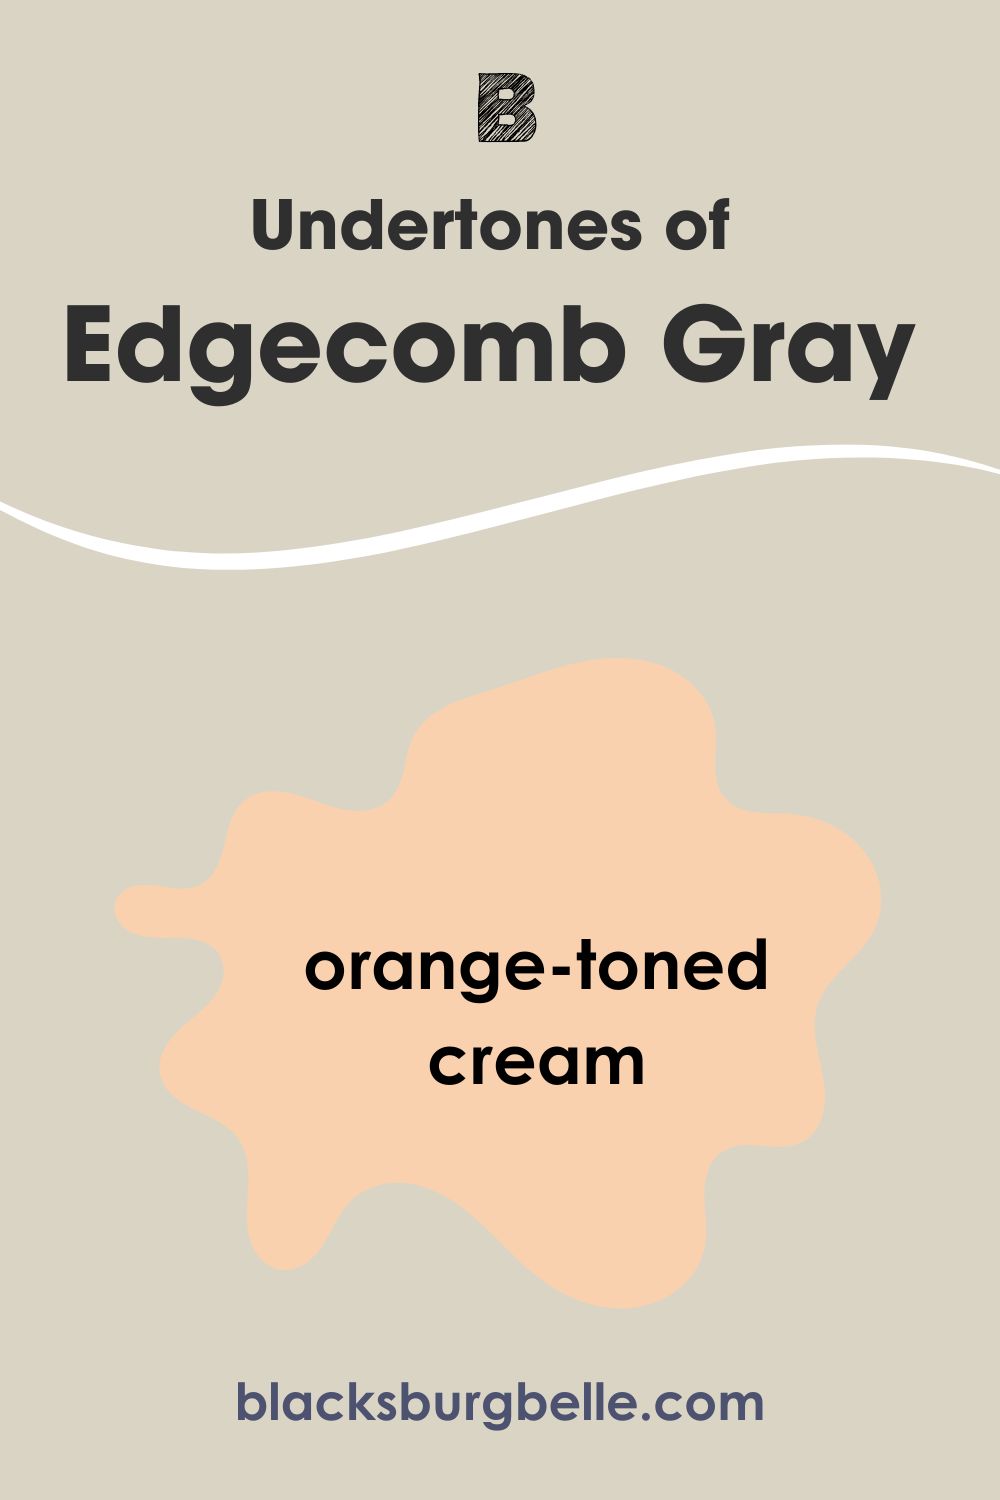 Undertones of Edgecomb Gray